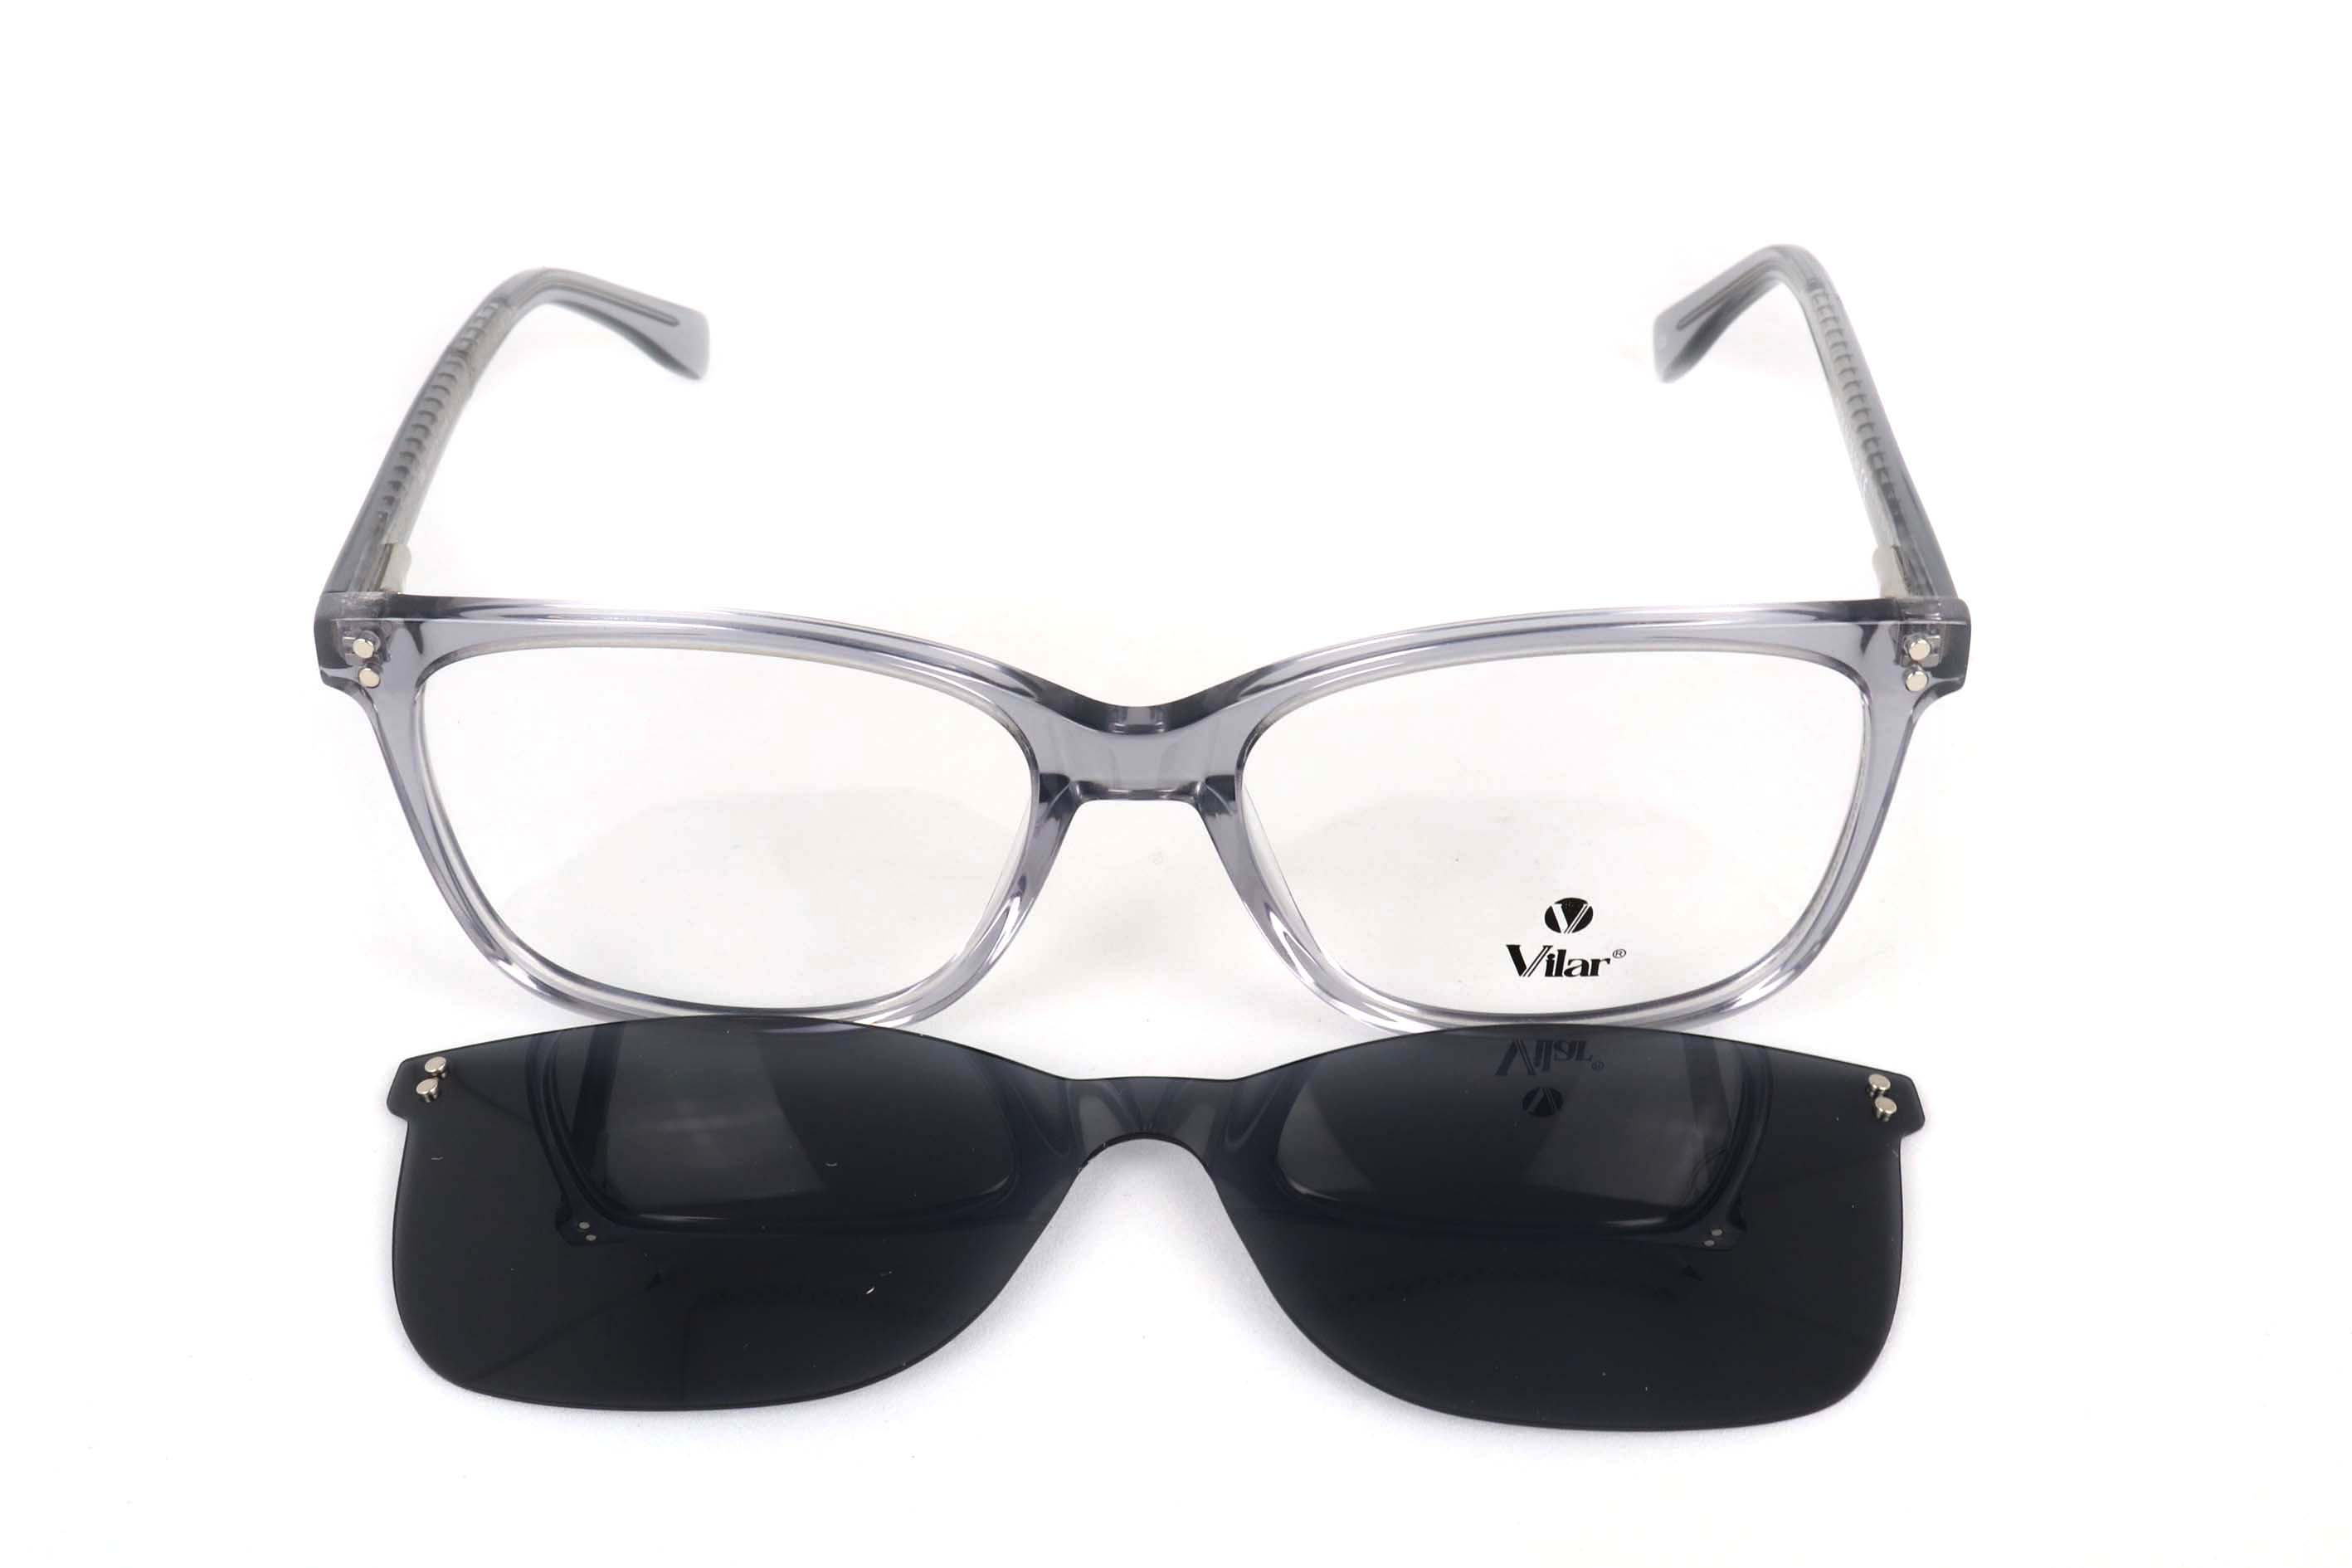 Vilar Eyeglasses -G5126-C5-54-18-145